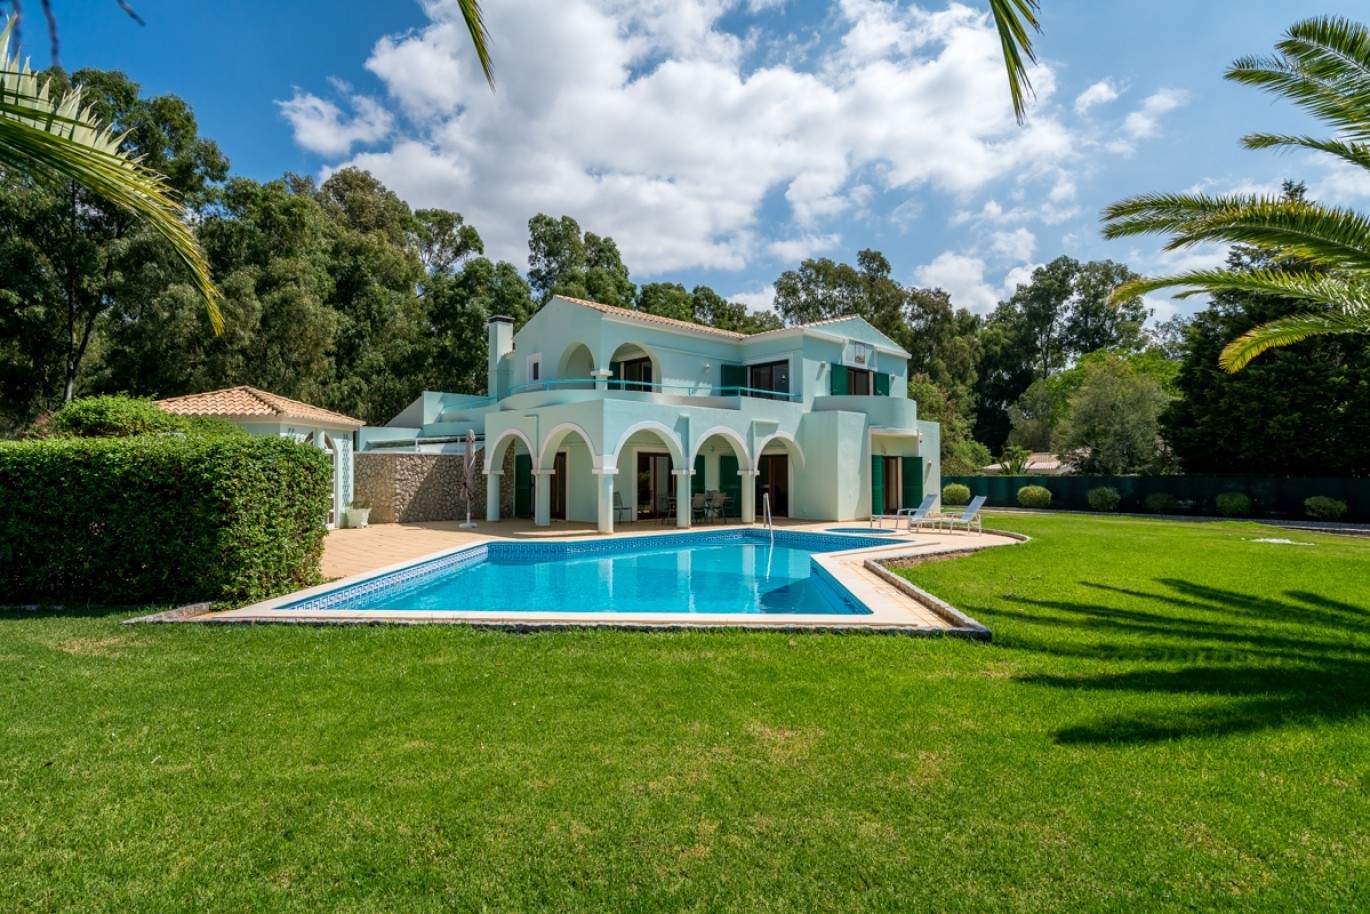 Sale of villa with garden and pool in Penina, Alvor, Algarve, Portugal_83415